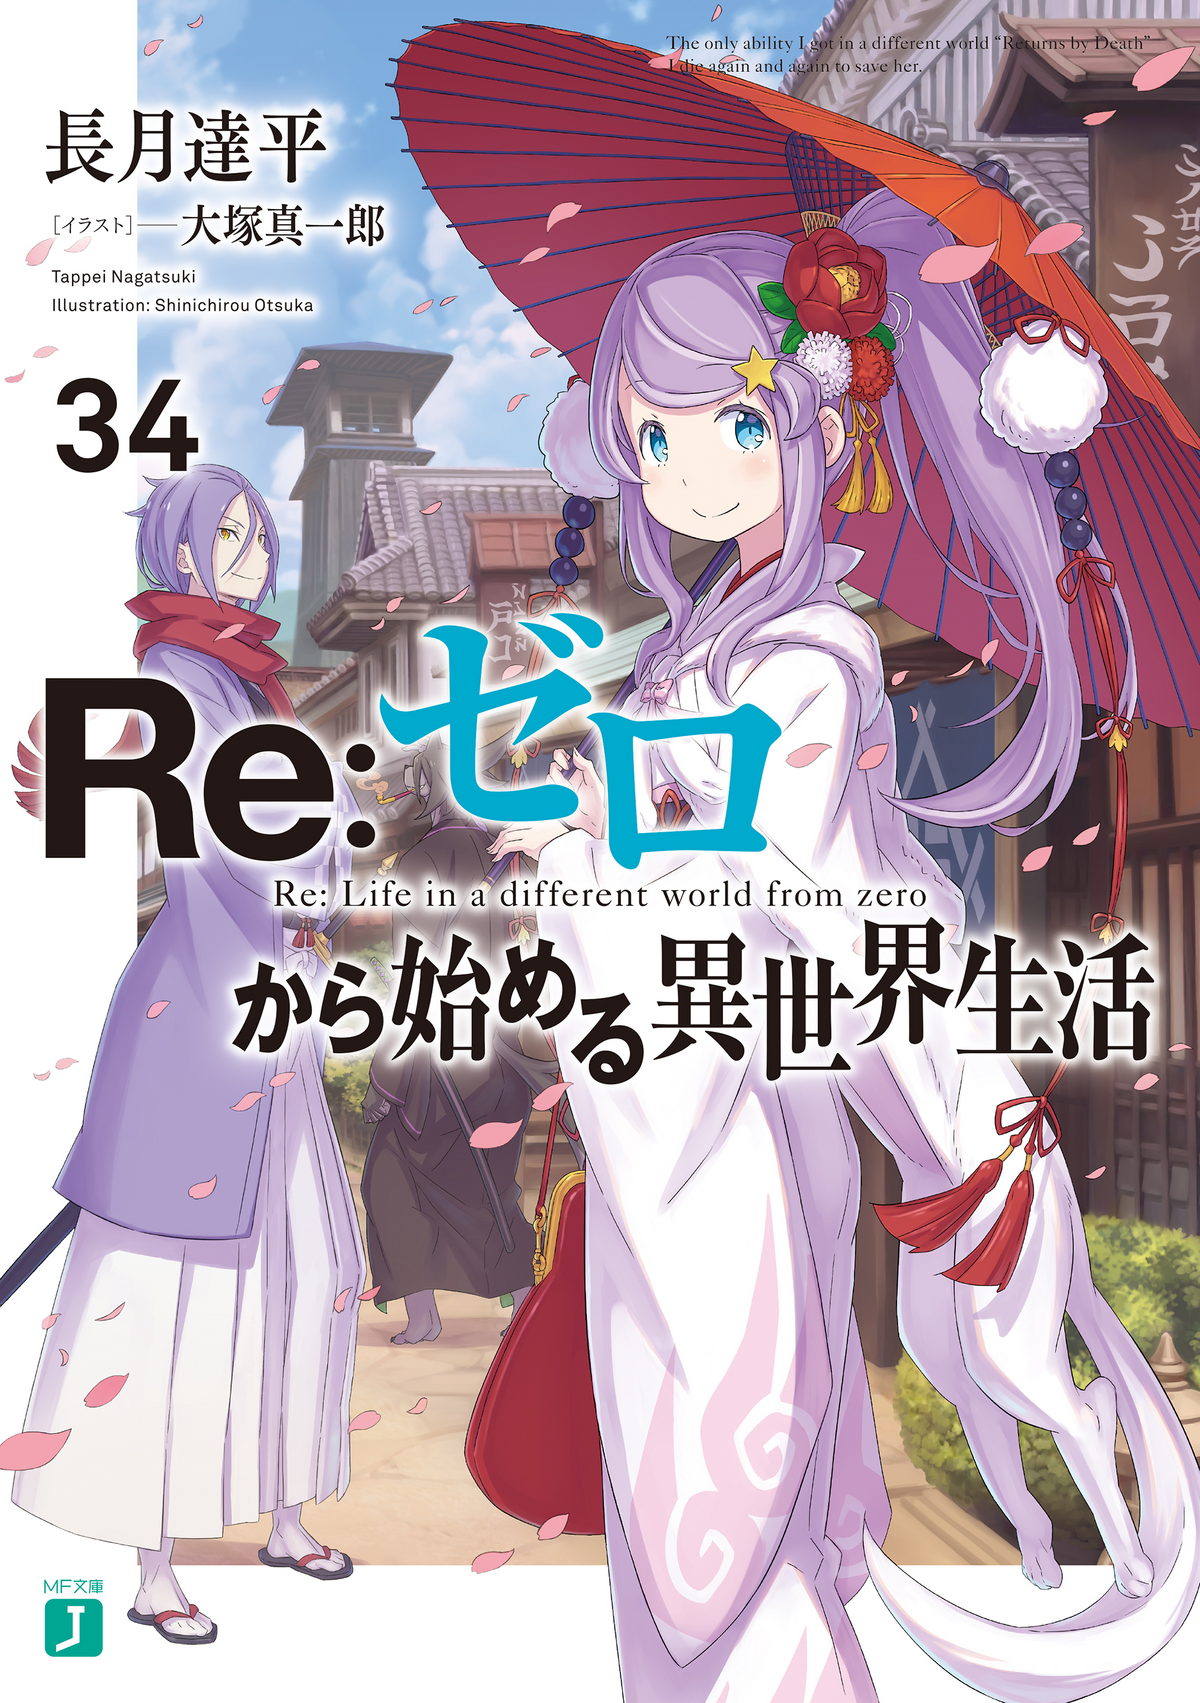 Visit Rezero.wikia.com - Re:Zero Wiki